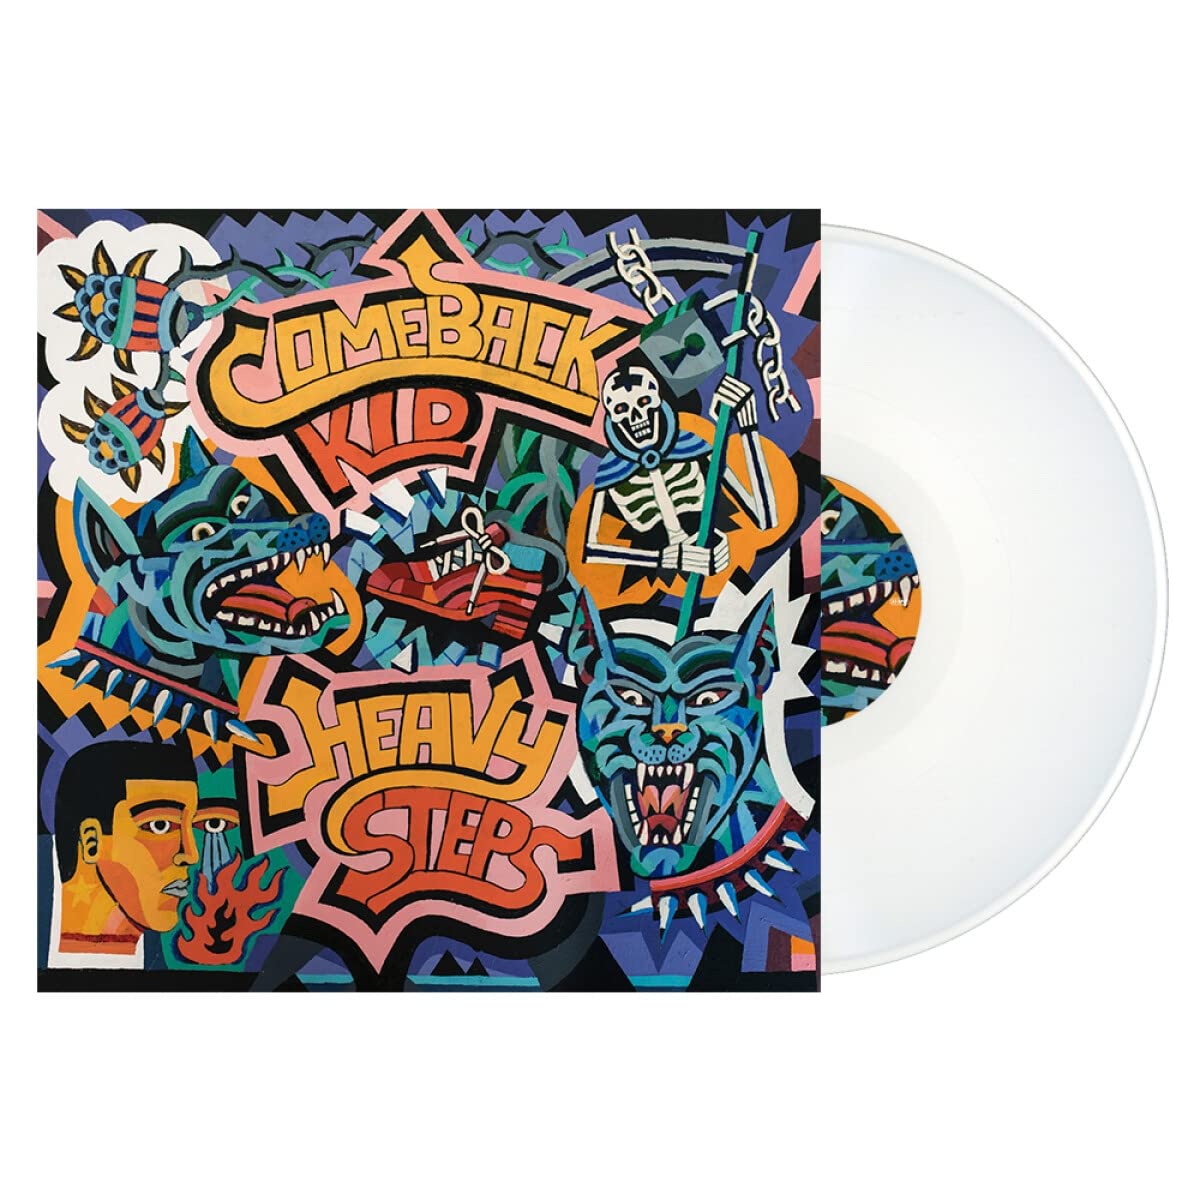 COMEBACK KID - HEAVY STEPS (White Vinyl) LP